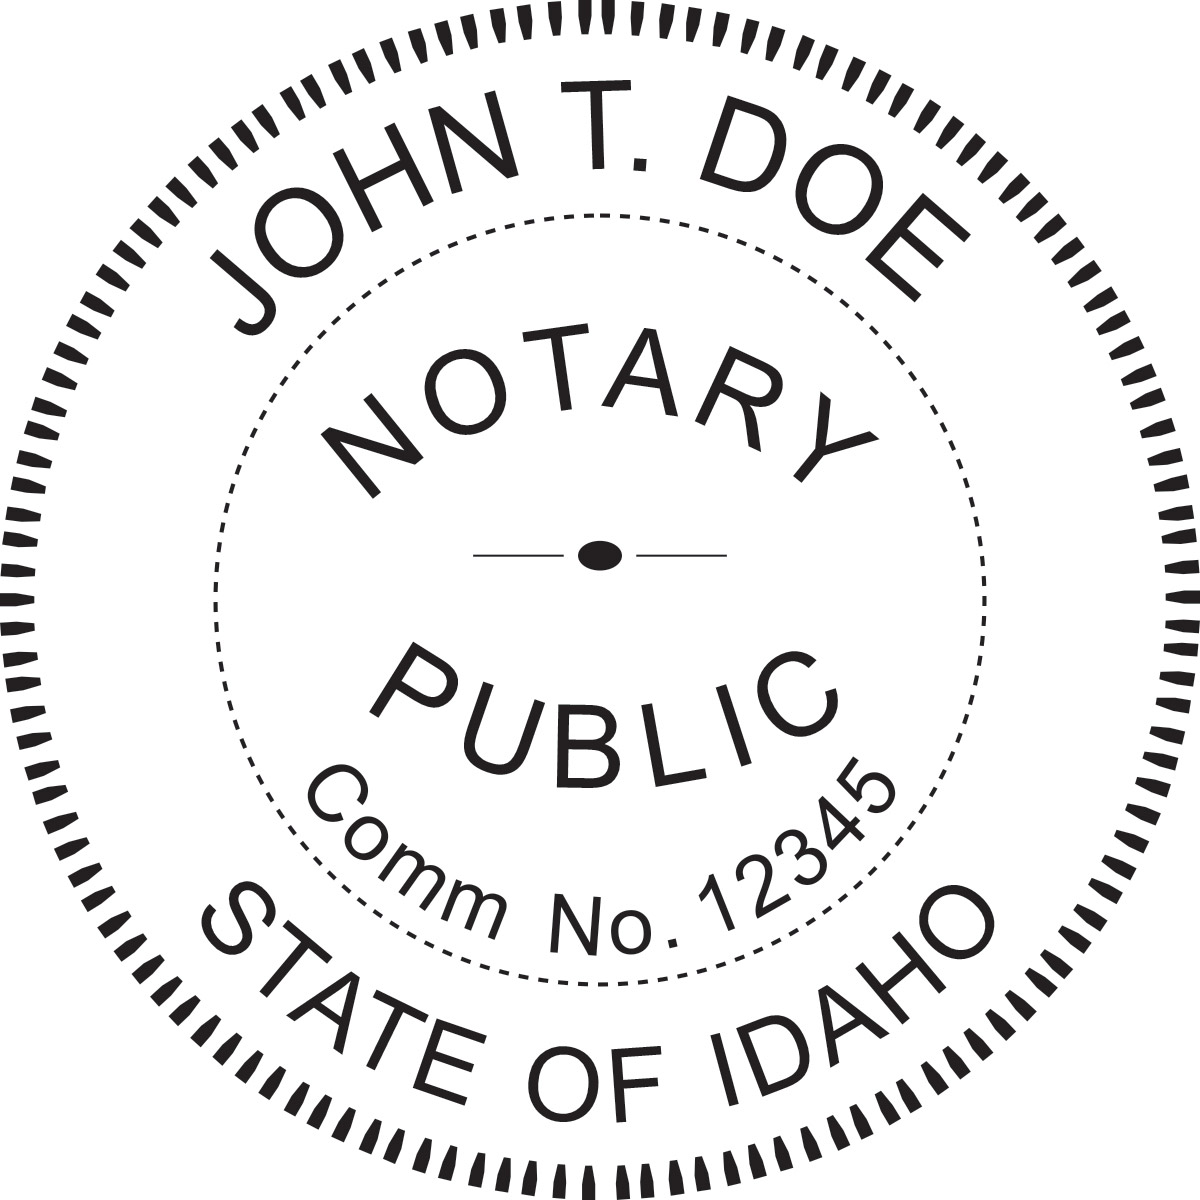 notary seal - wood stamp - idaho